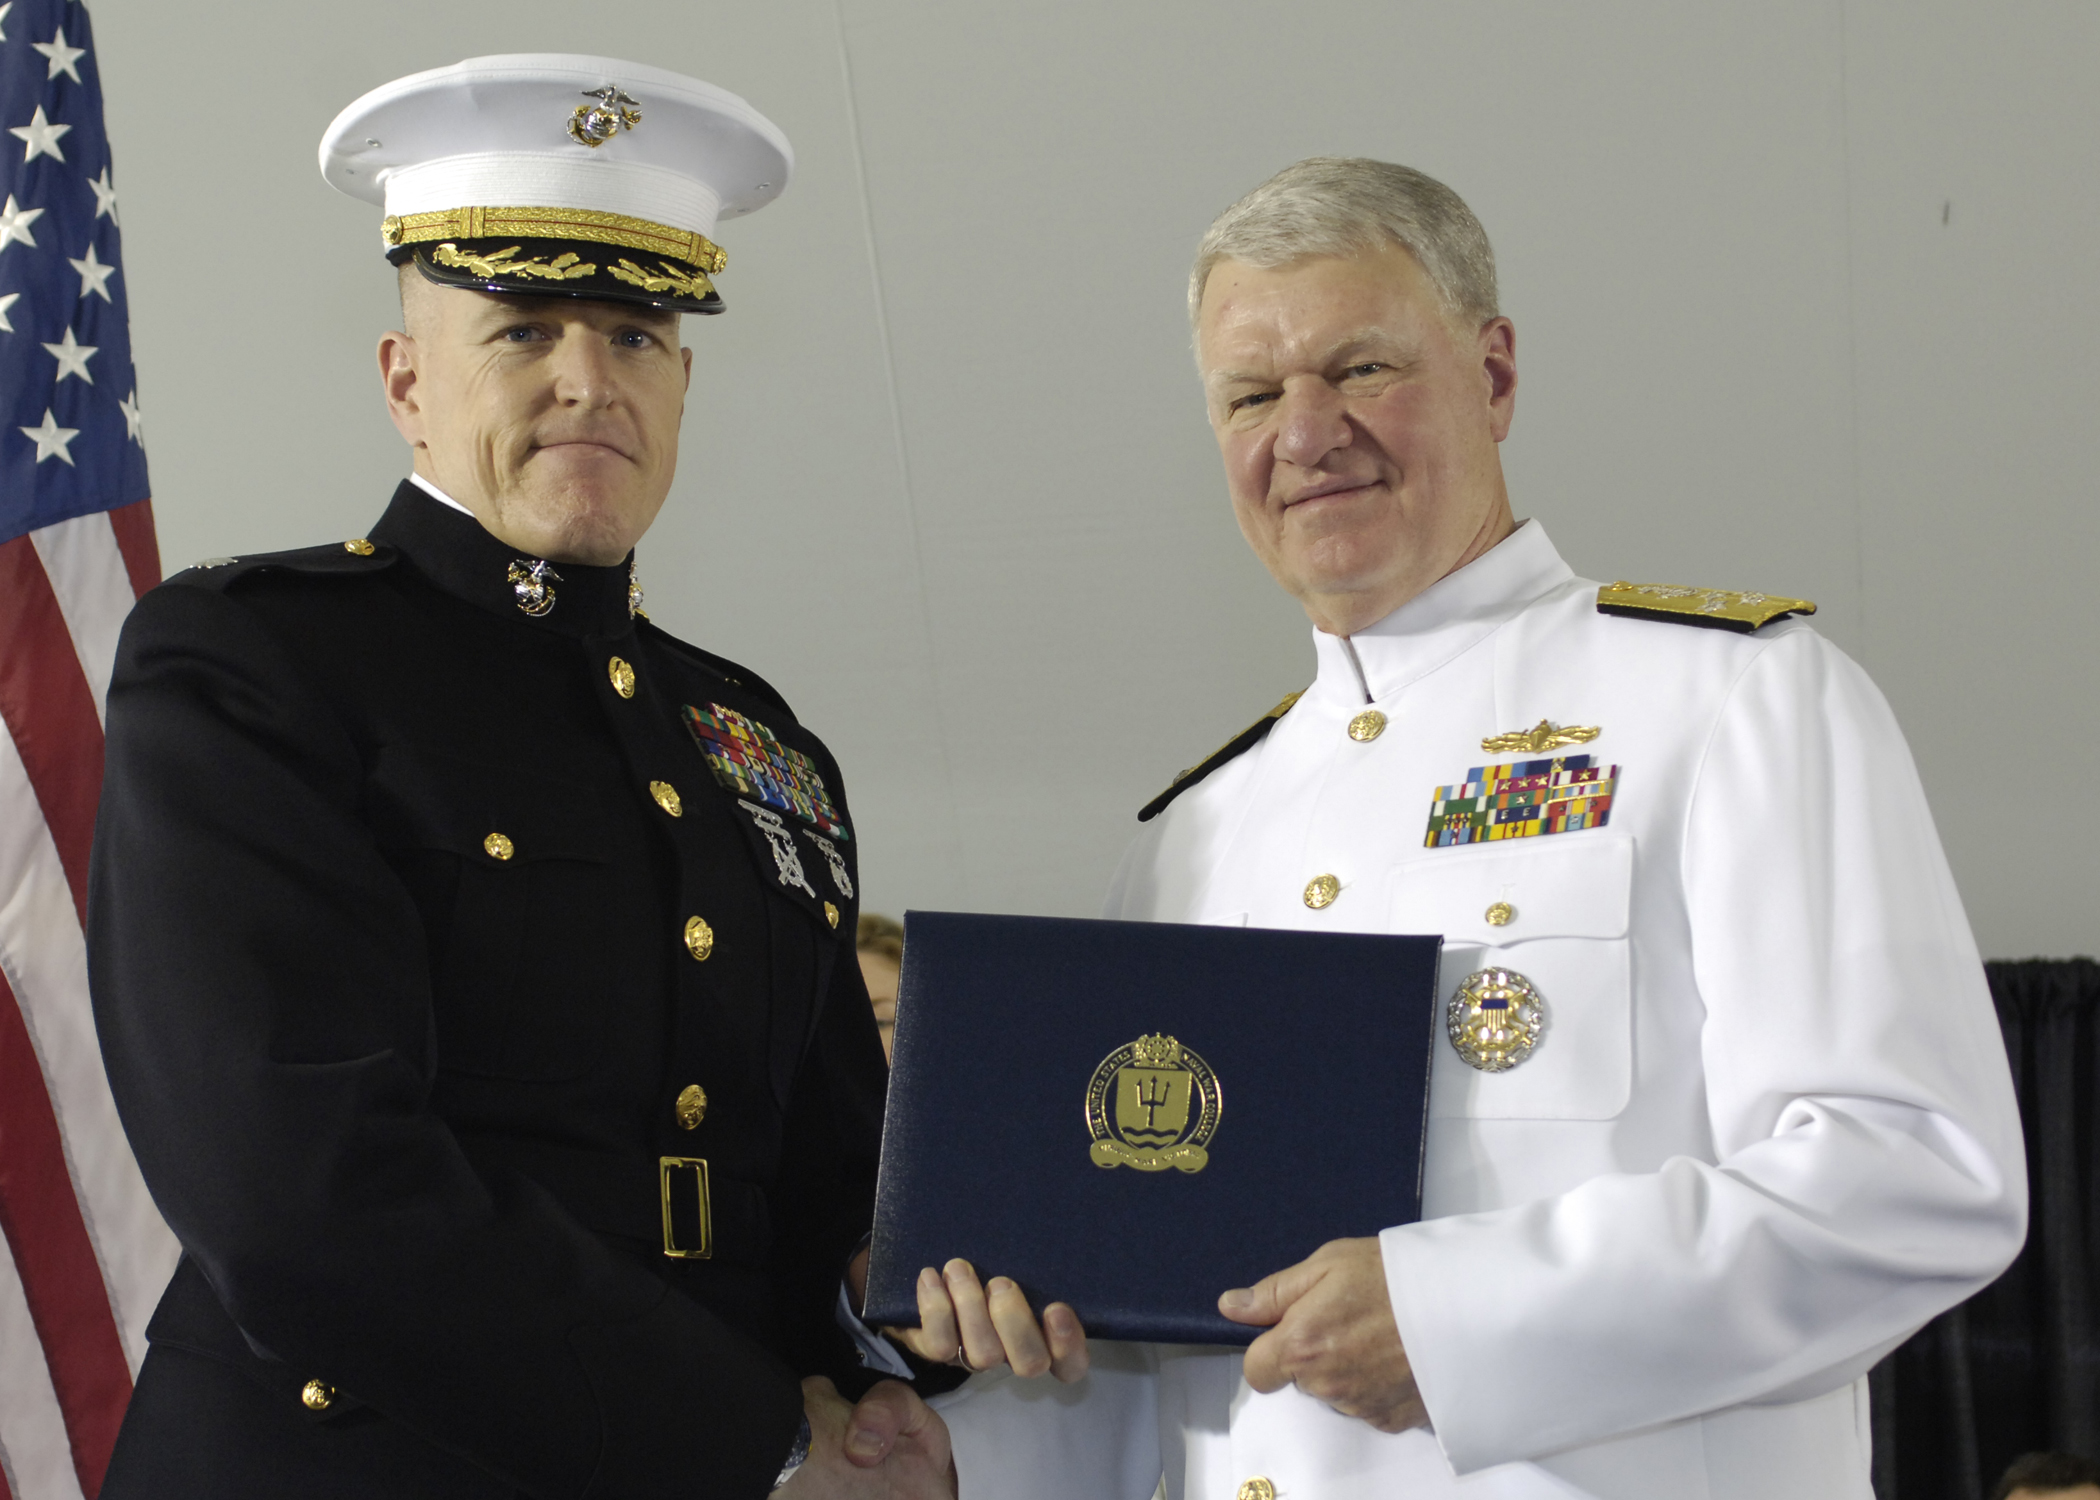 a man in uniform is holding an award